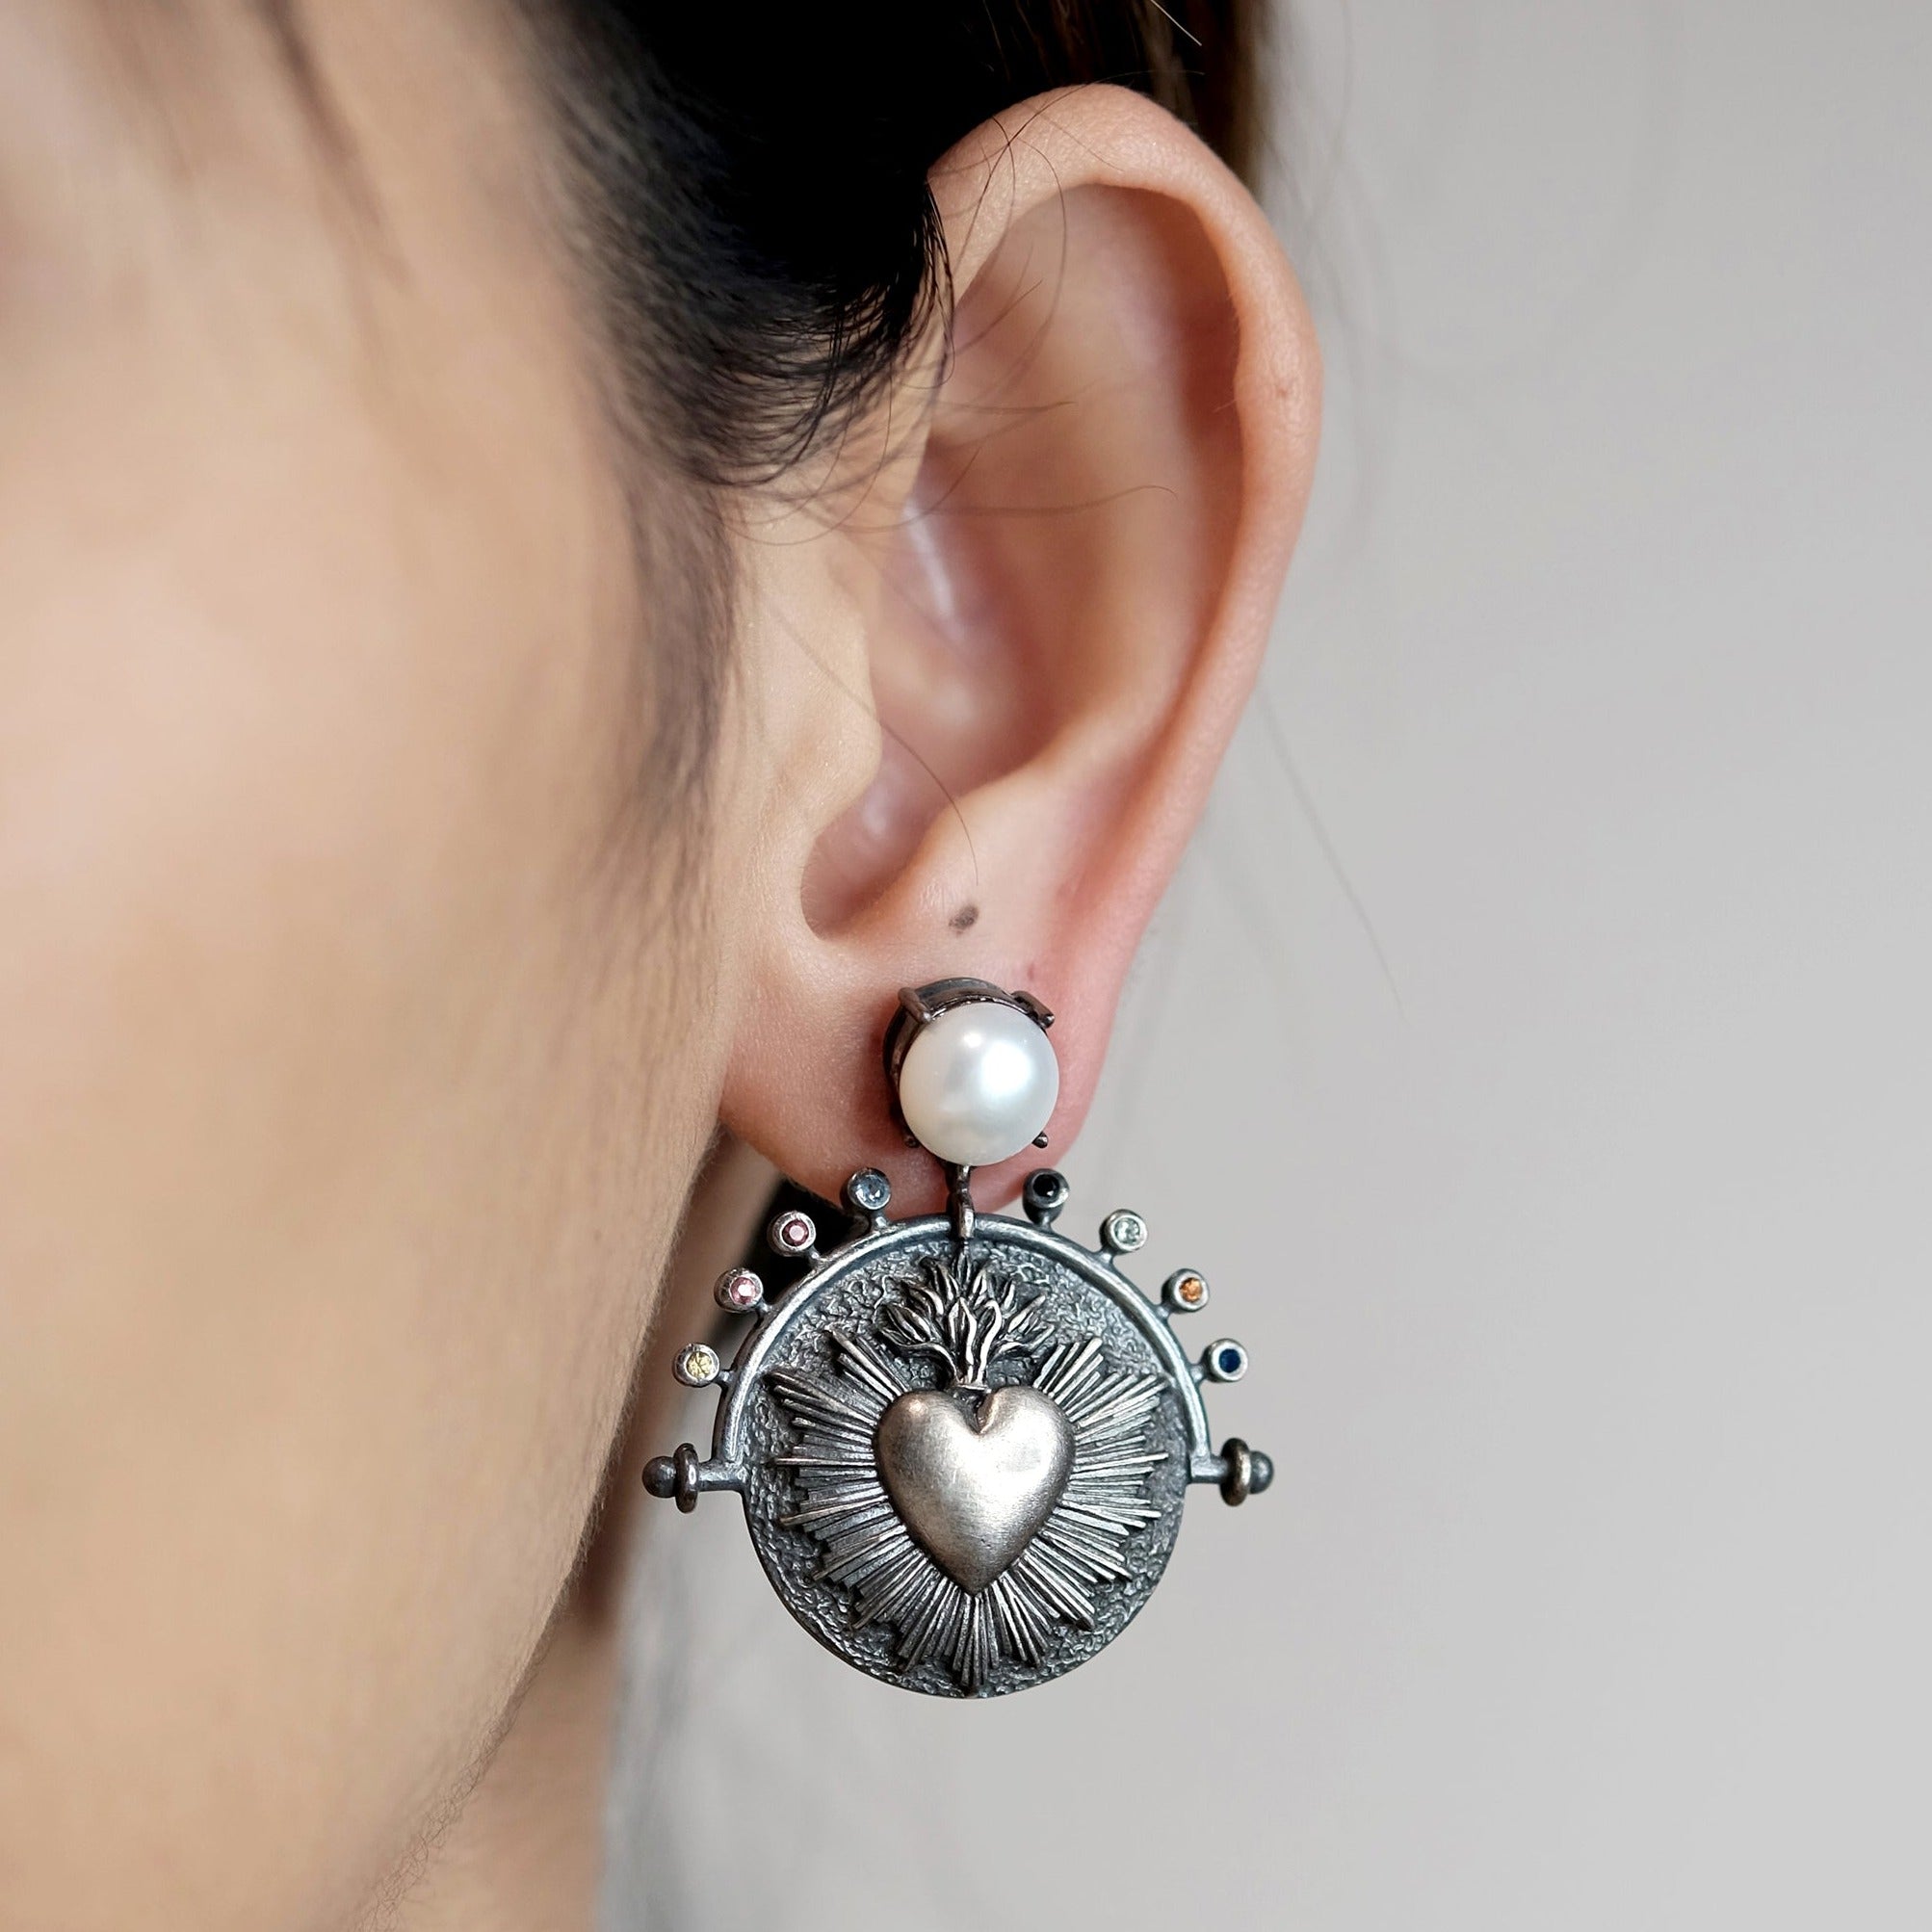 The Madstone sacred heart earrings